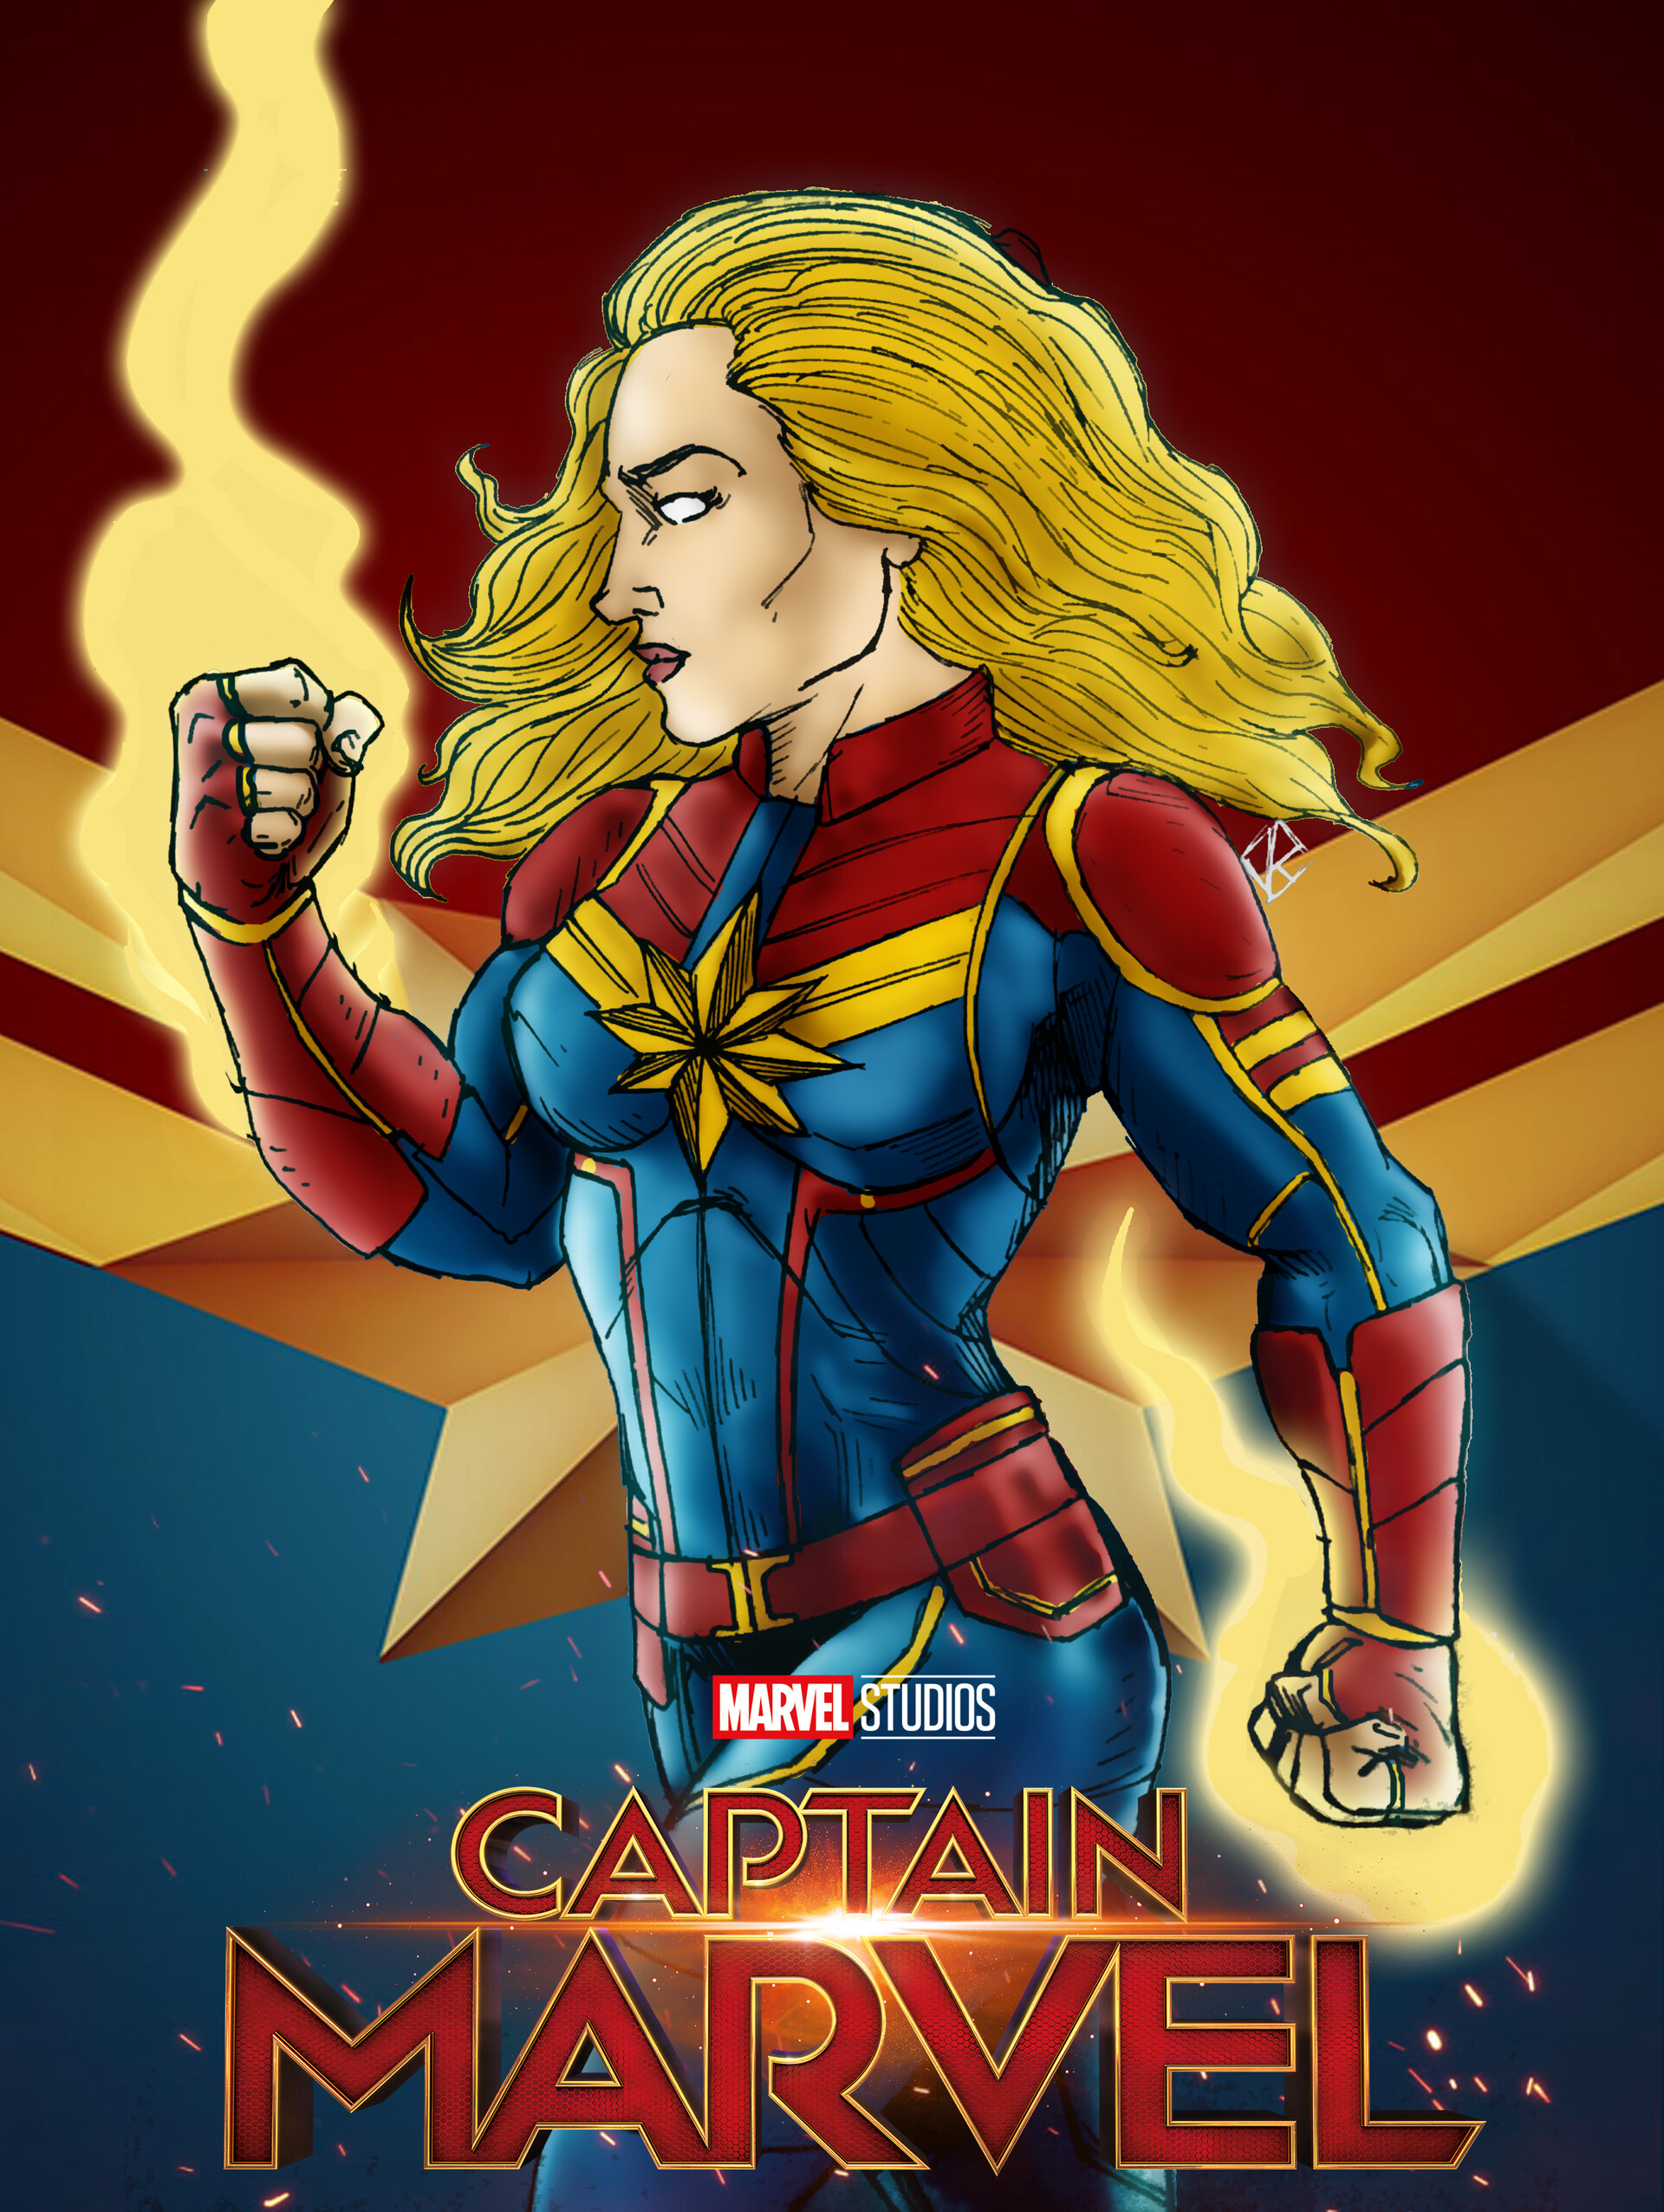 Rafael Danesin - Captain Marvel Poster